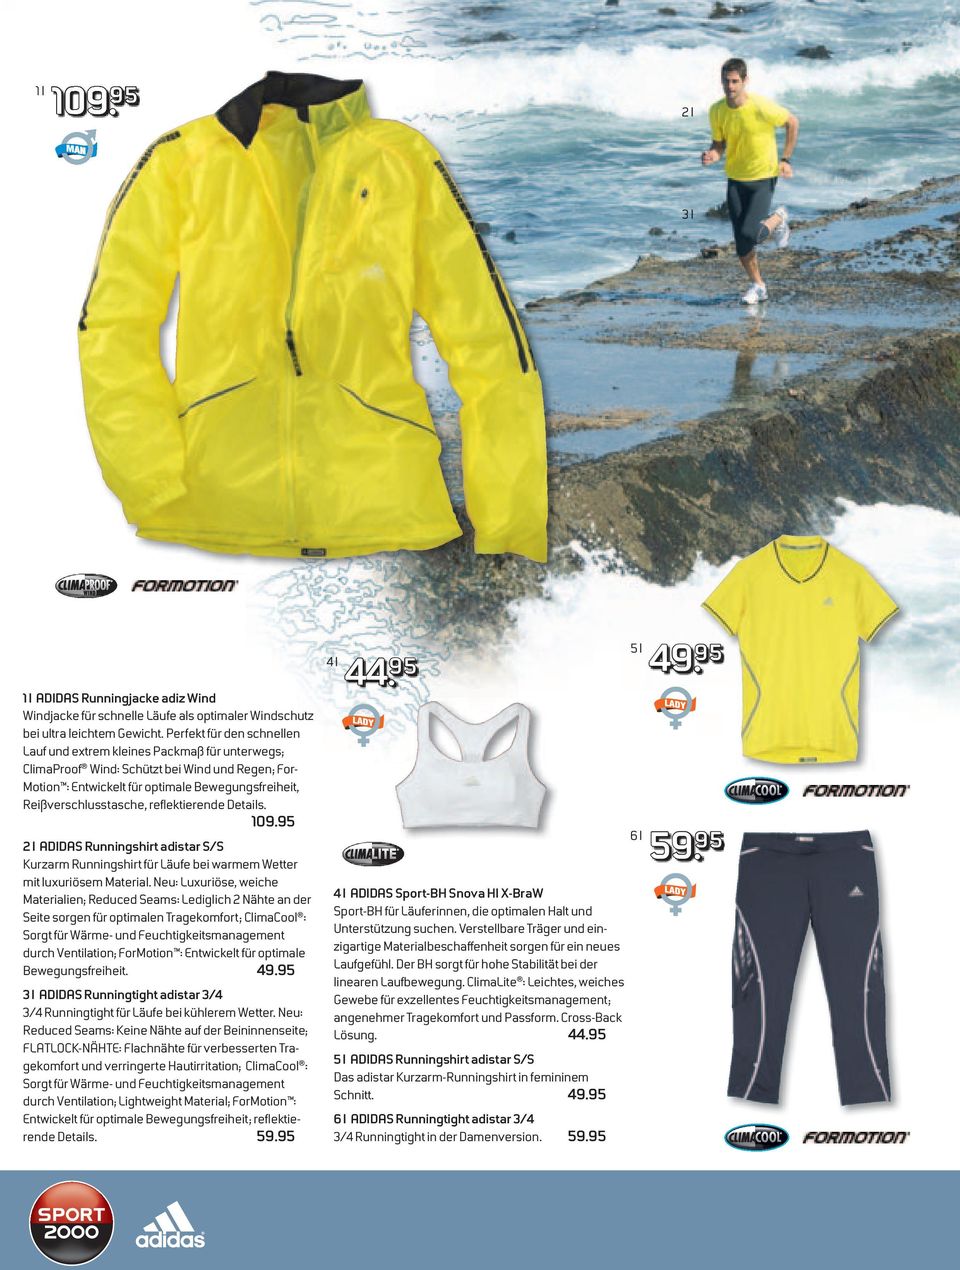 reflektierende Details. 109.95 ADIDAS Runningshirt adistar S/S Kurzarm Runningshirt für Läufe bei warmem Wetter mit luxuriösem Material.